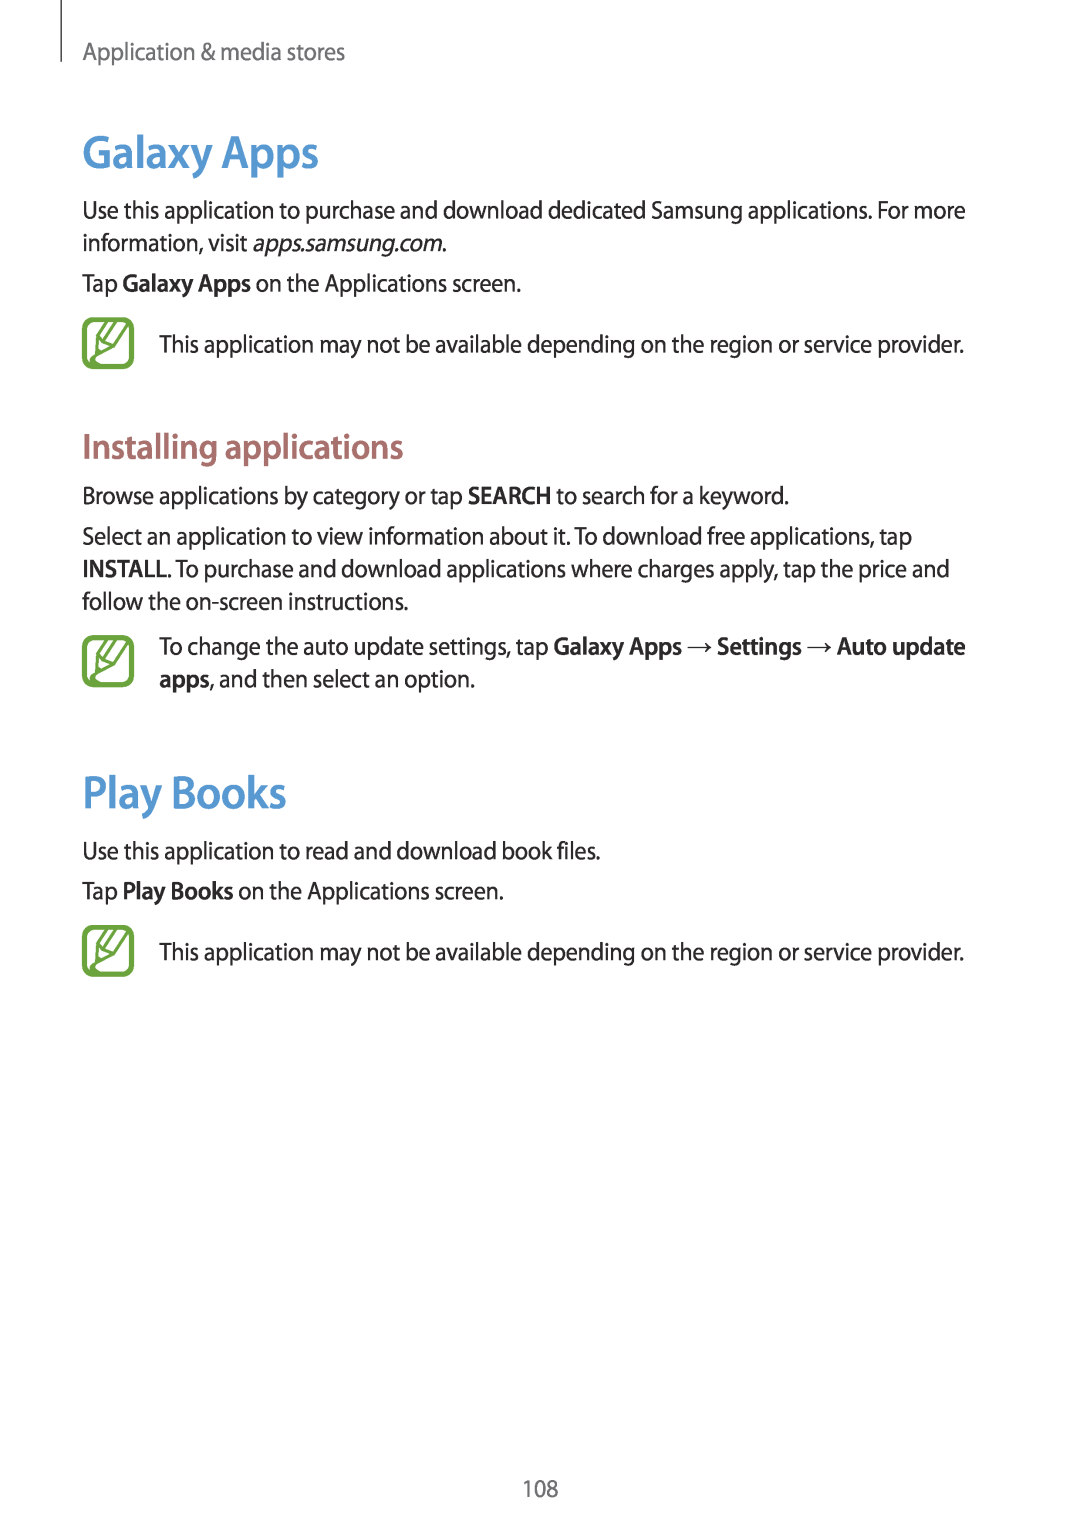 Samsung SM-P9000ZKATUR, SM-P9000ZWAATO manual Galaxy Apps, Play Books, Application & media stores, Installing applications 